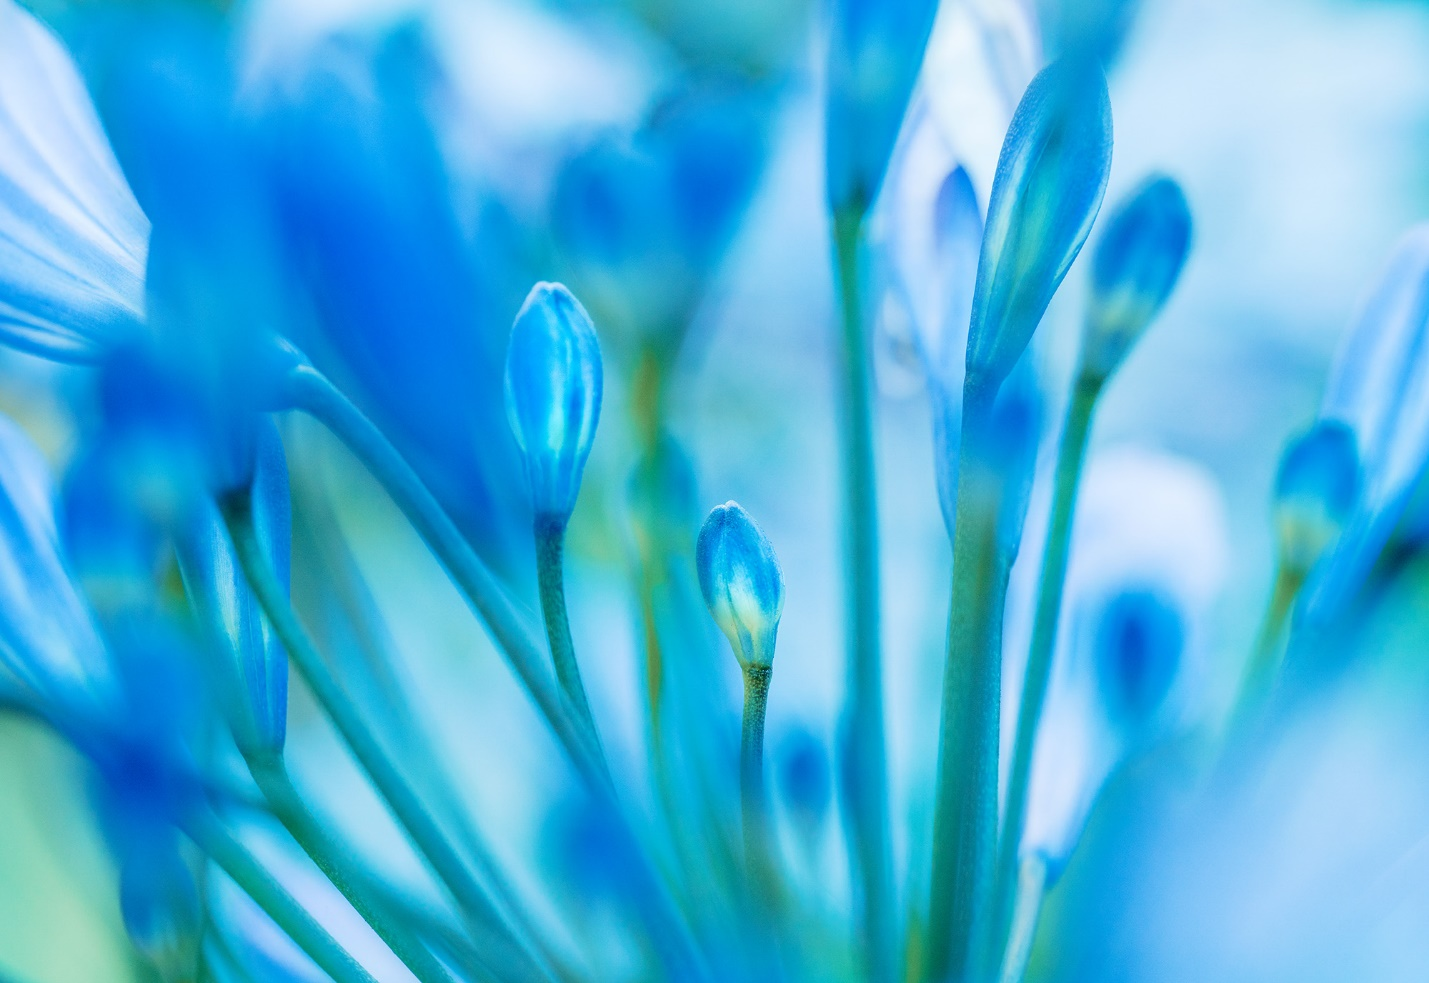  macro shot of blue-green flowers